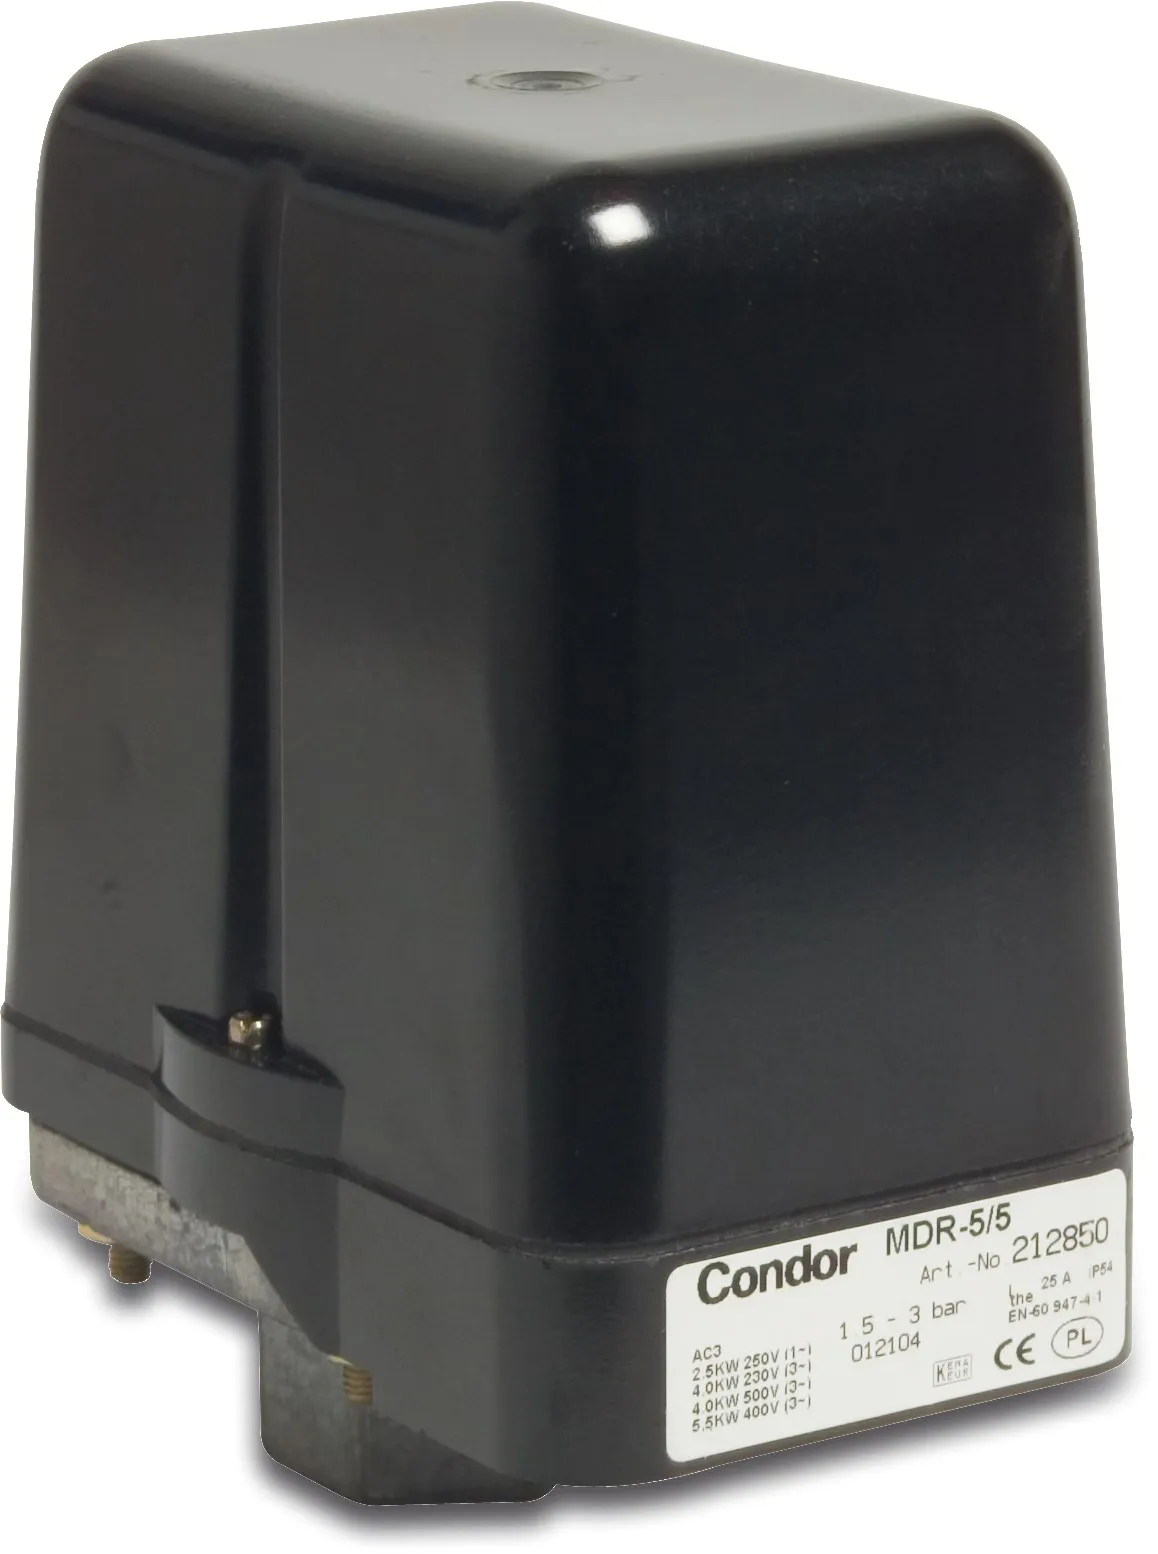 Condor Drukschakelaar 1/2" binnendraad 25A 230/400VAC type MDR 5-5